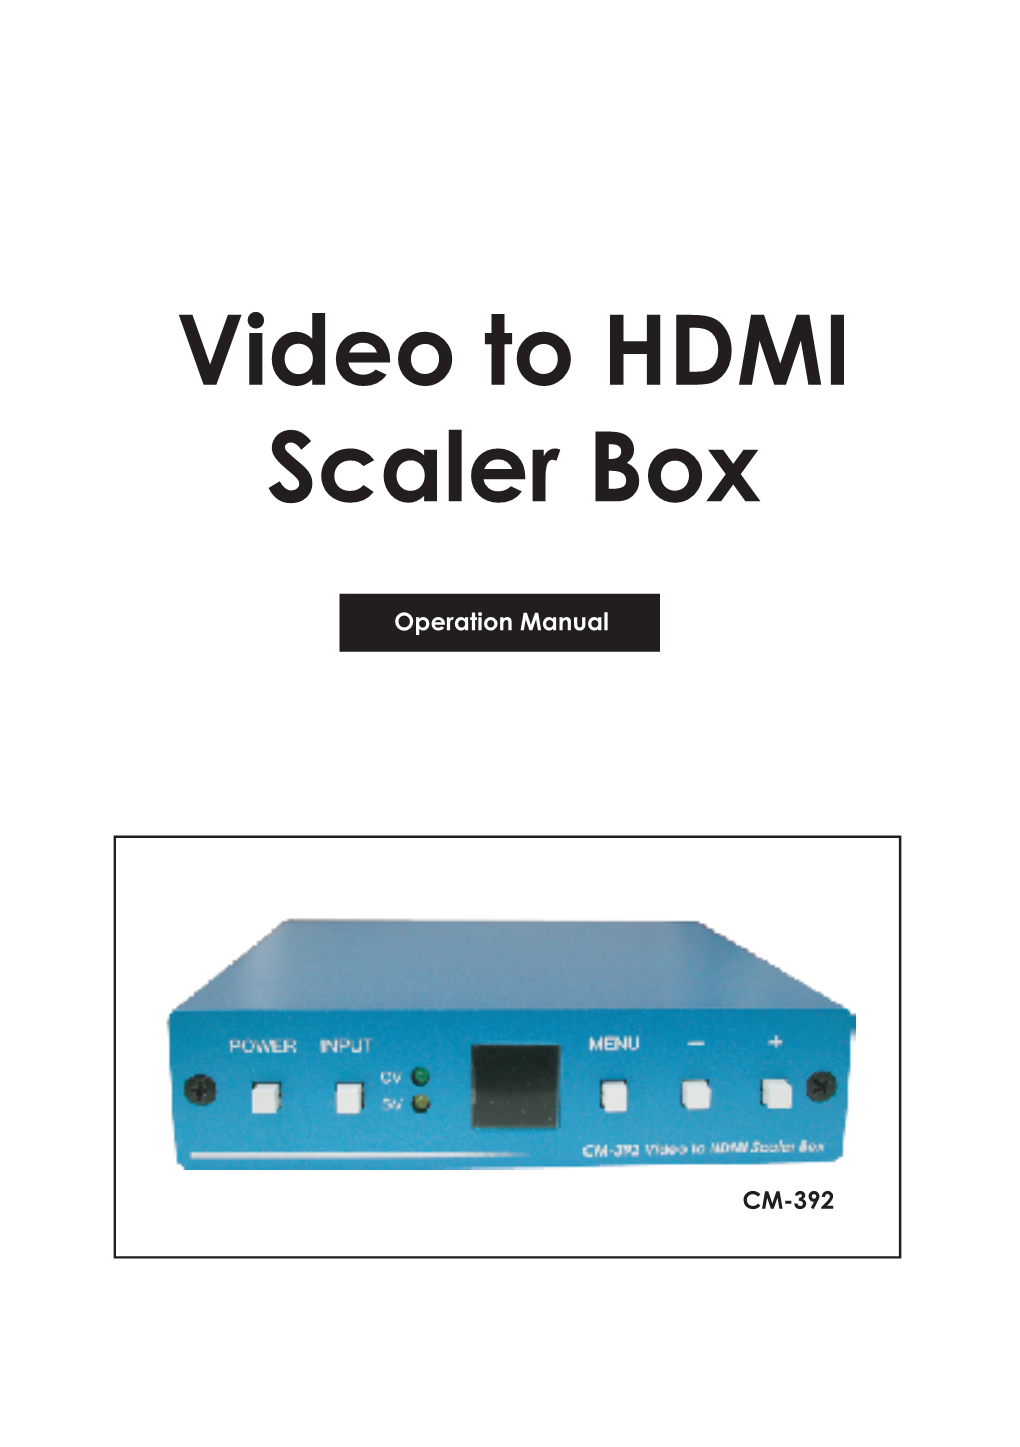 Video to HDMI Scaler Box